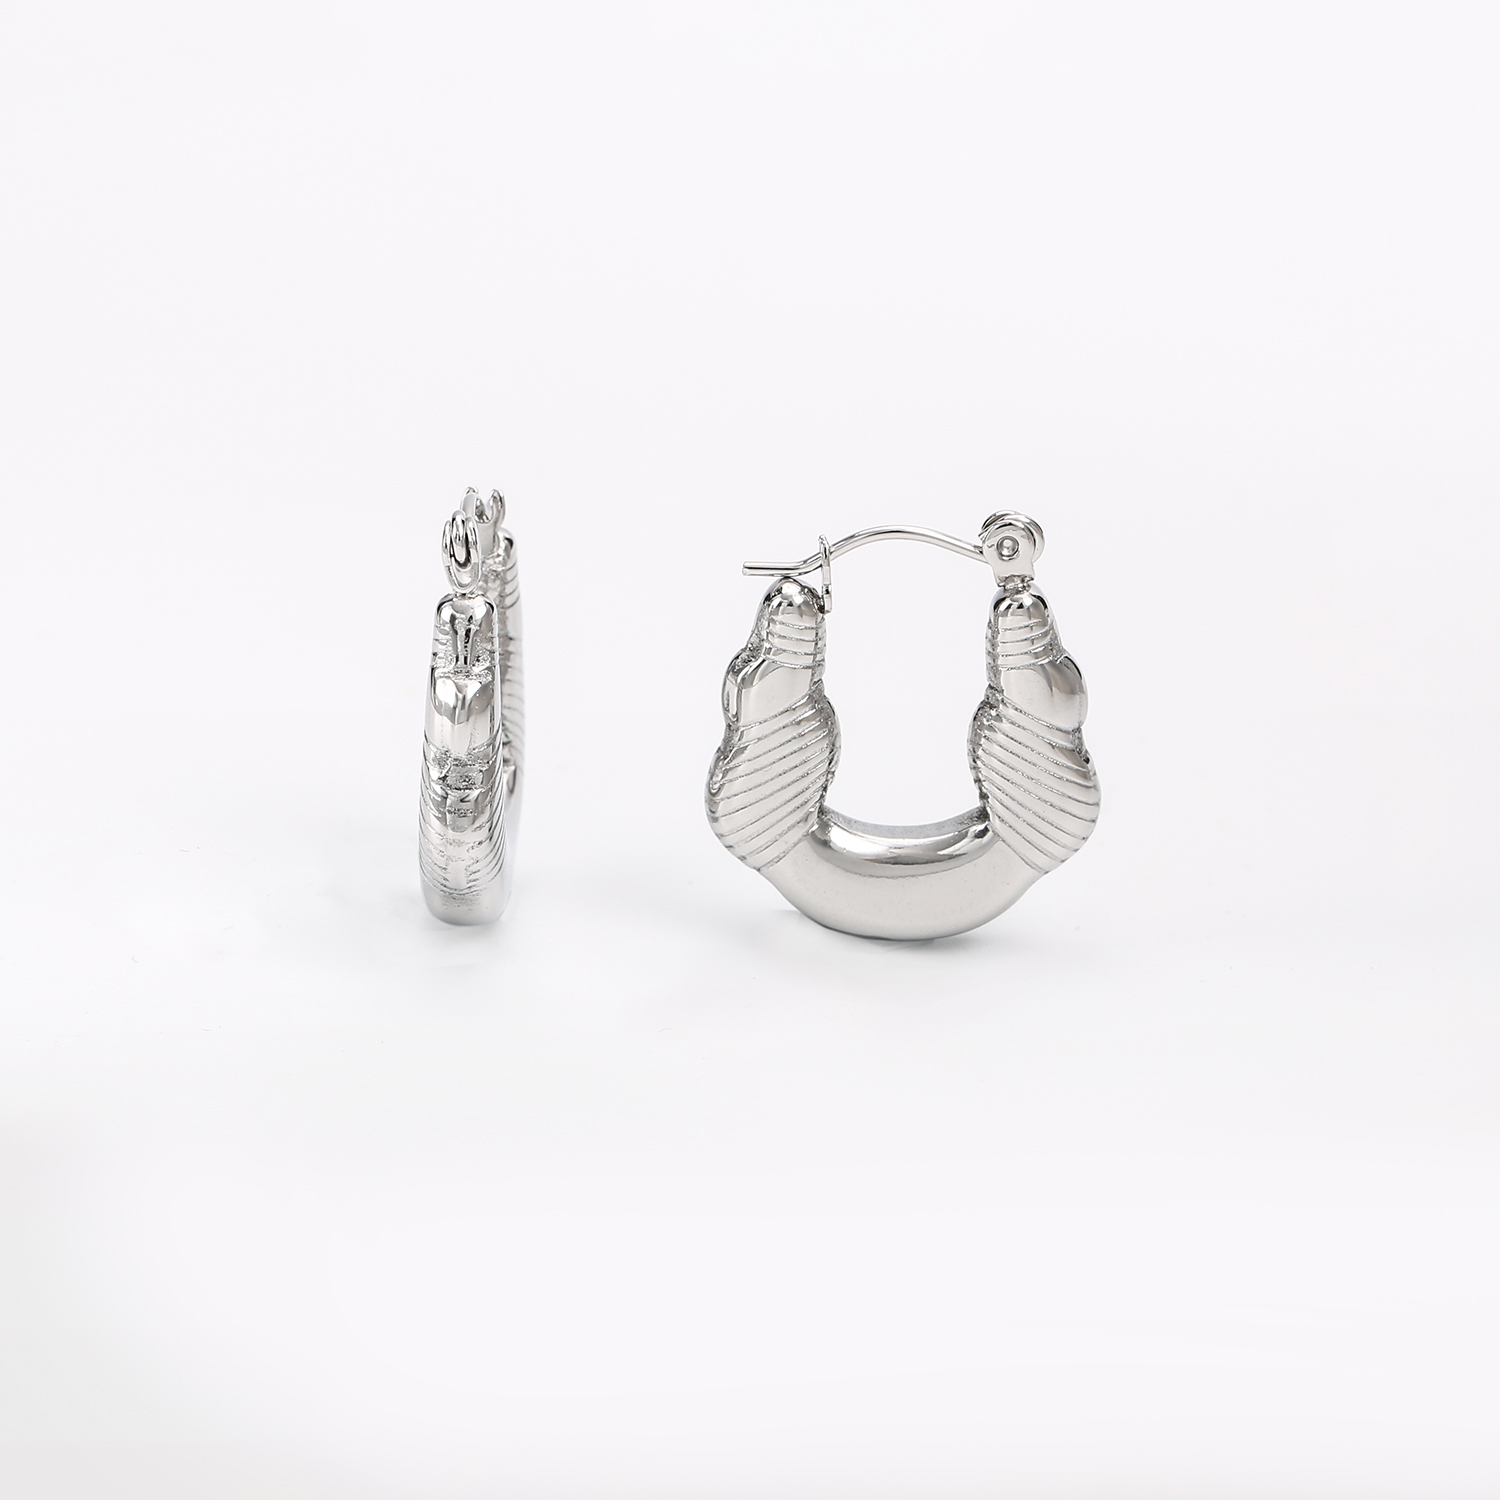 316L stainless steel irregular shape fashion earrings (2)1f7